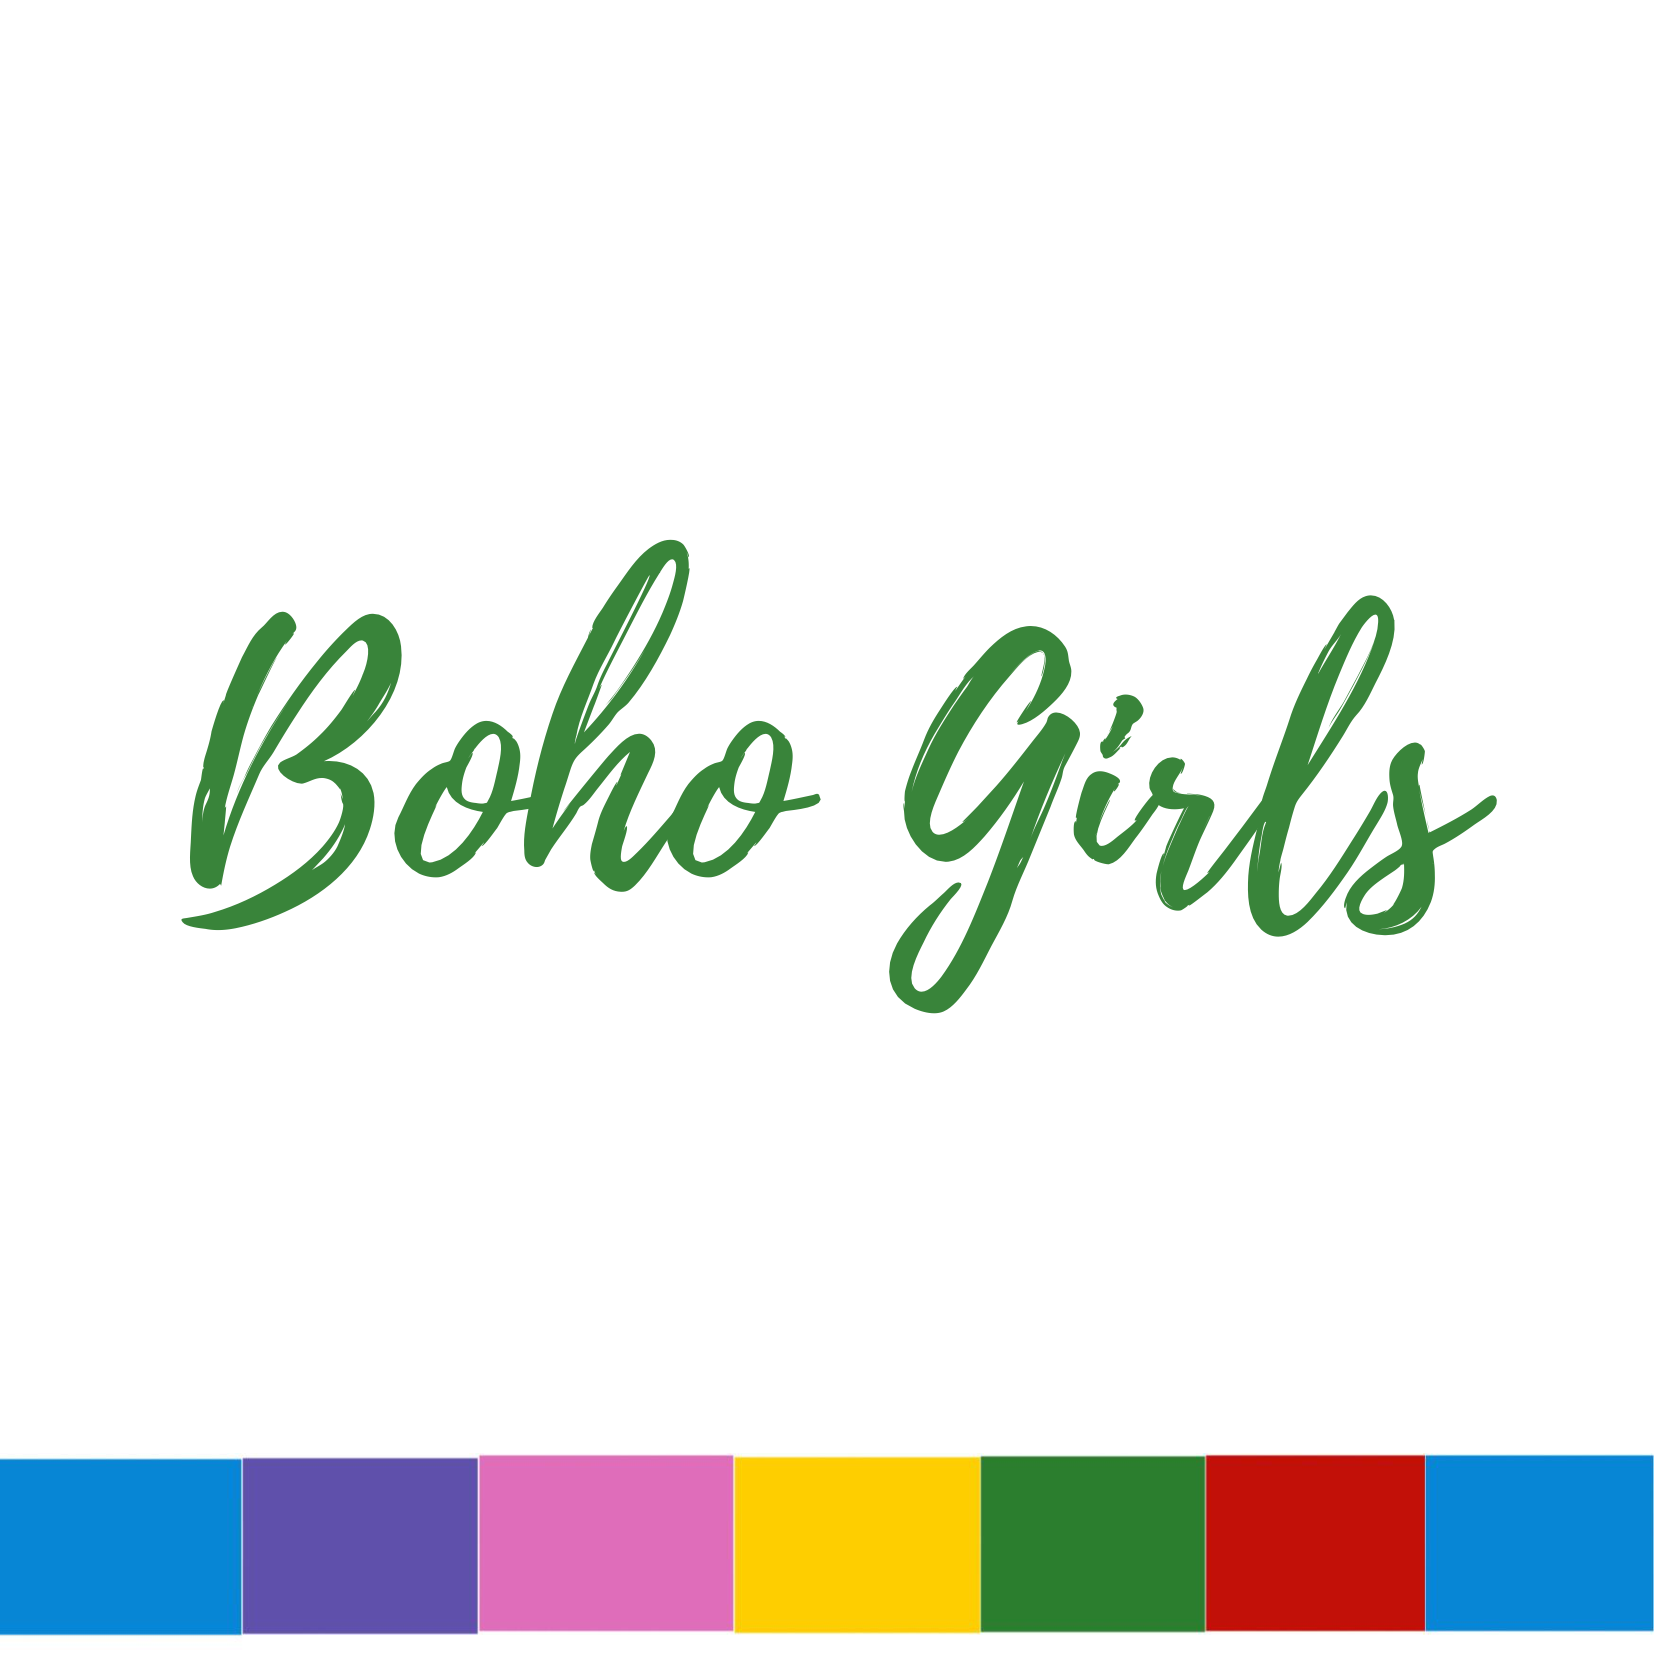 Boho Girls stamps